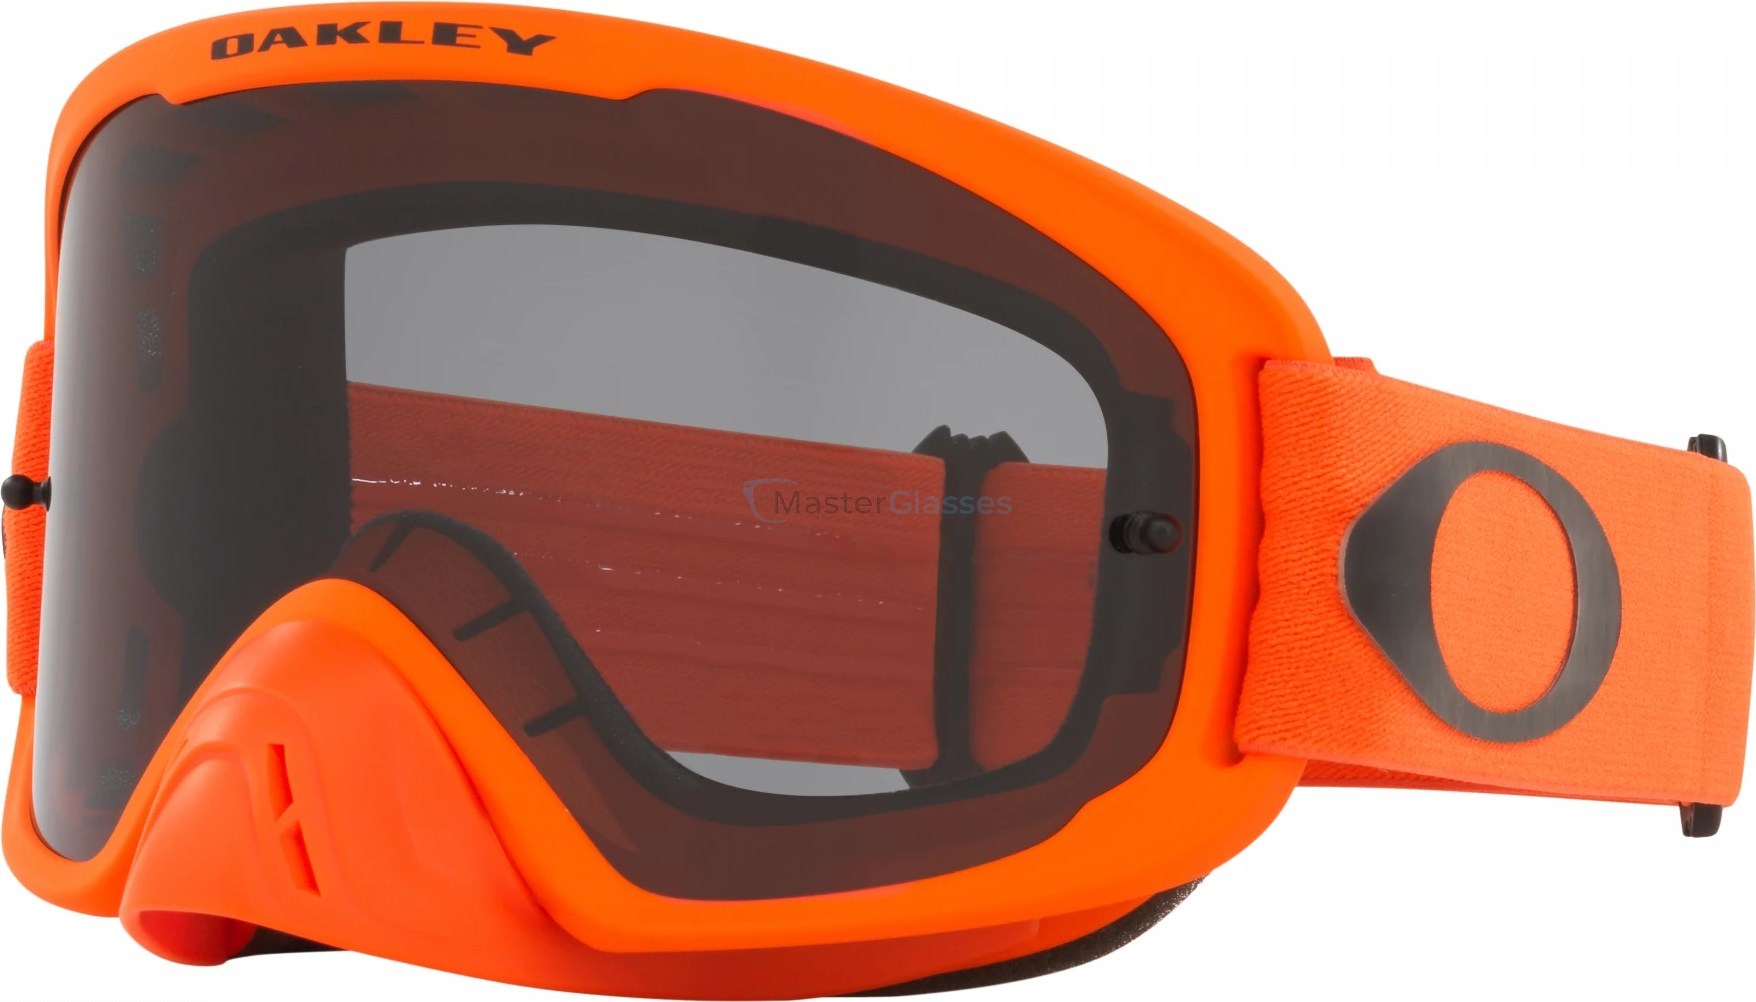    Oakley mx goggles O Frame 2.0 Pro Mx OO7115 711533 Moto Orange